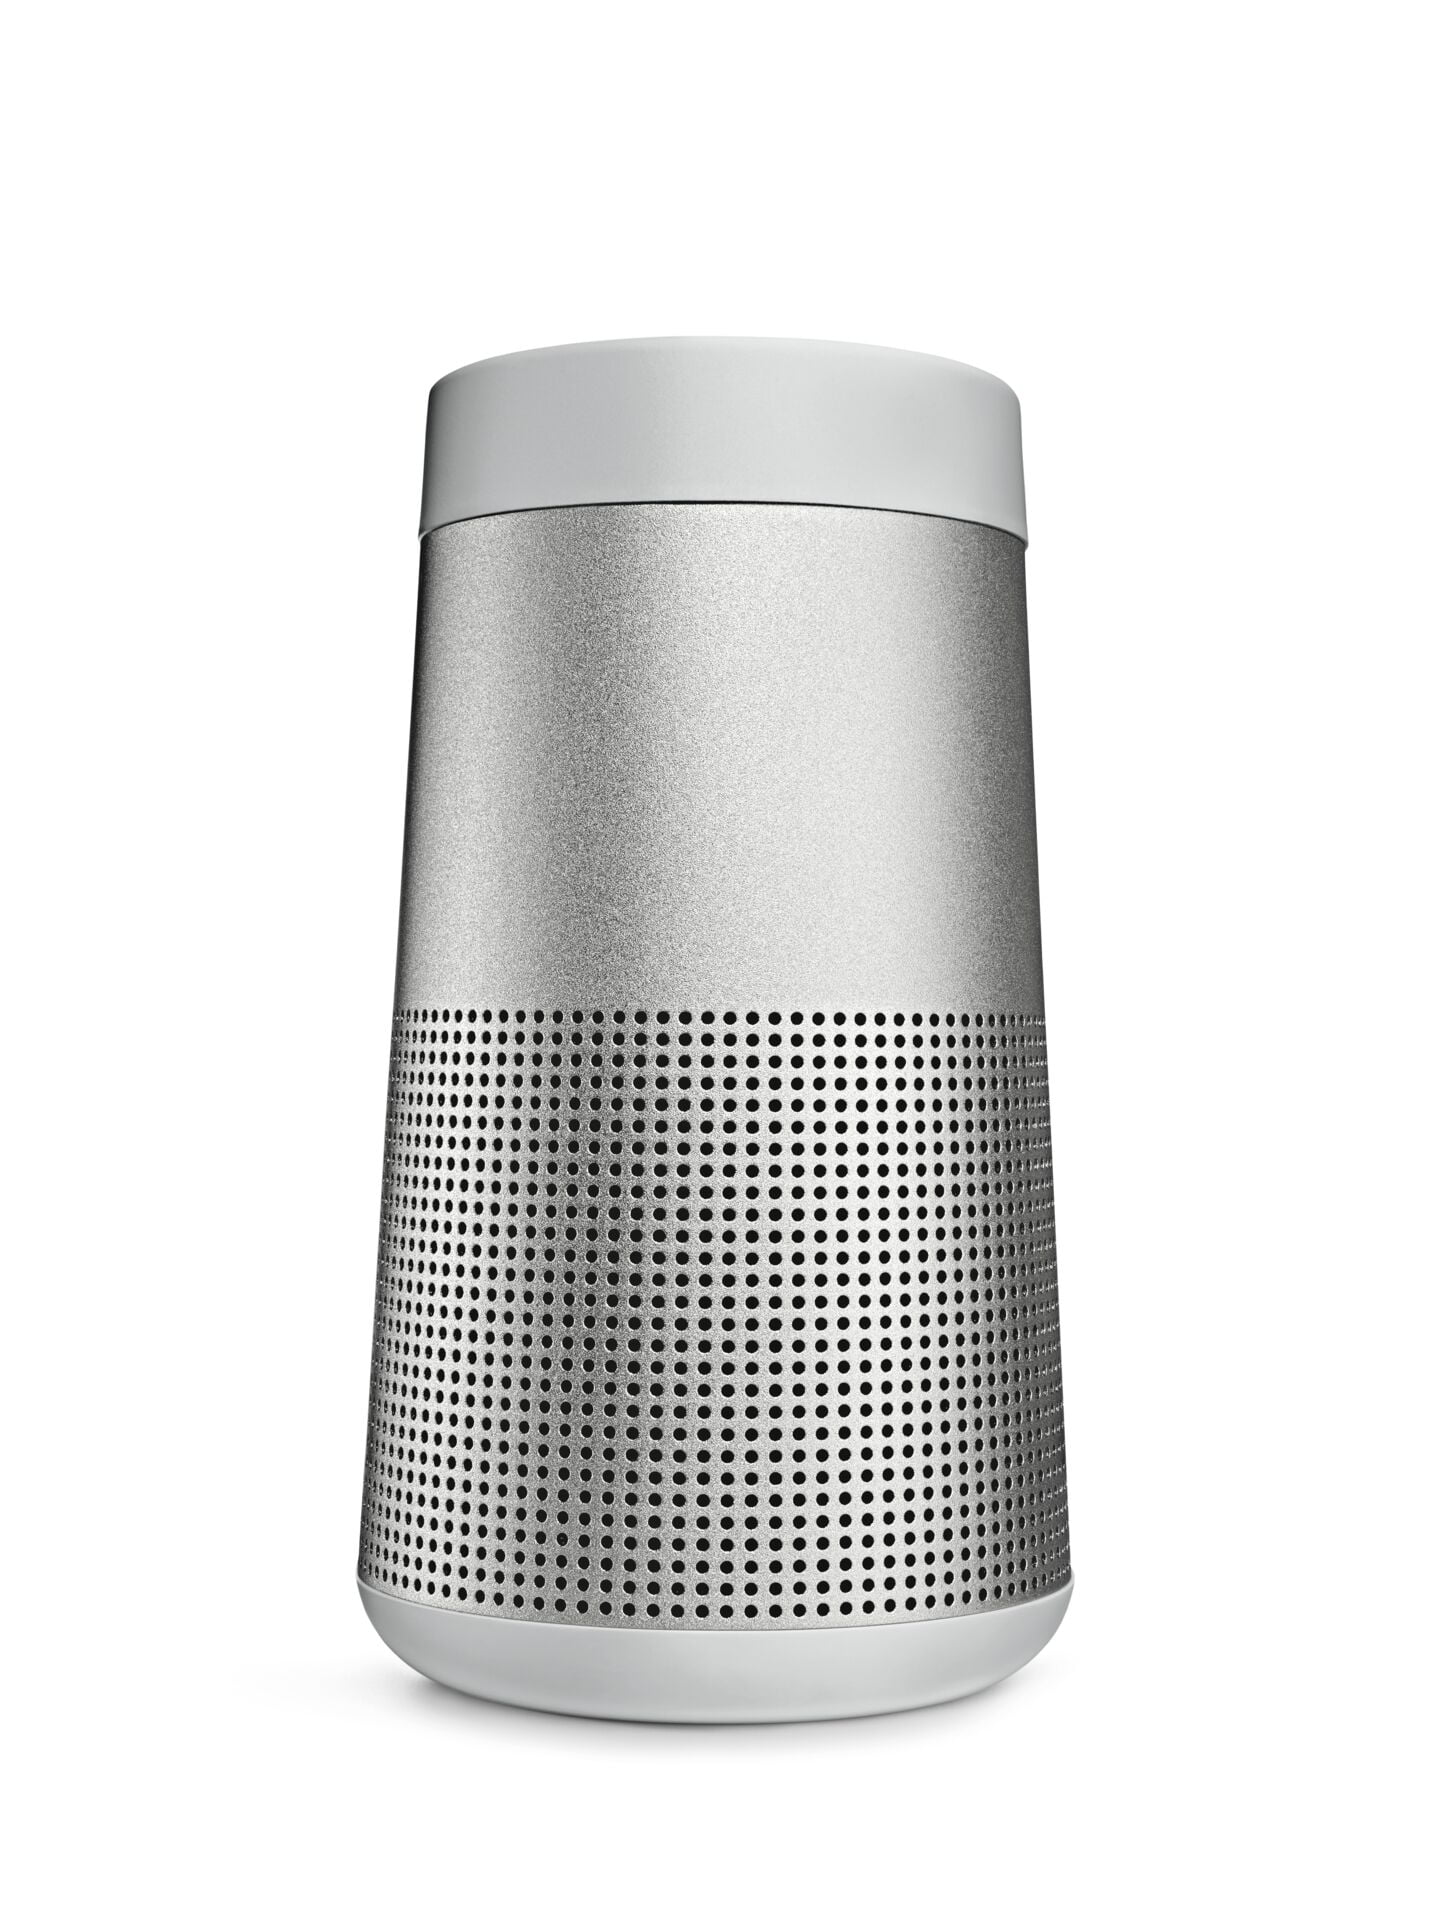 Bose SoundLink Revolve Portable Bluetooth Speaker (Series II), Silver -  Walmart.com